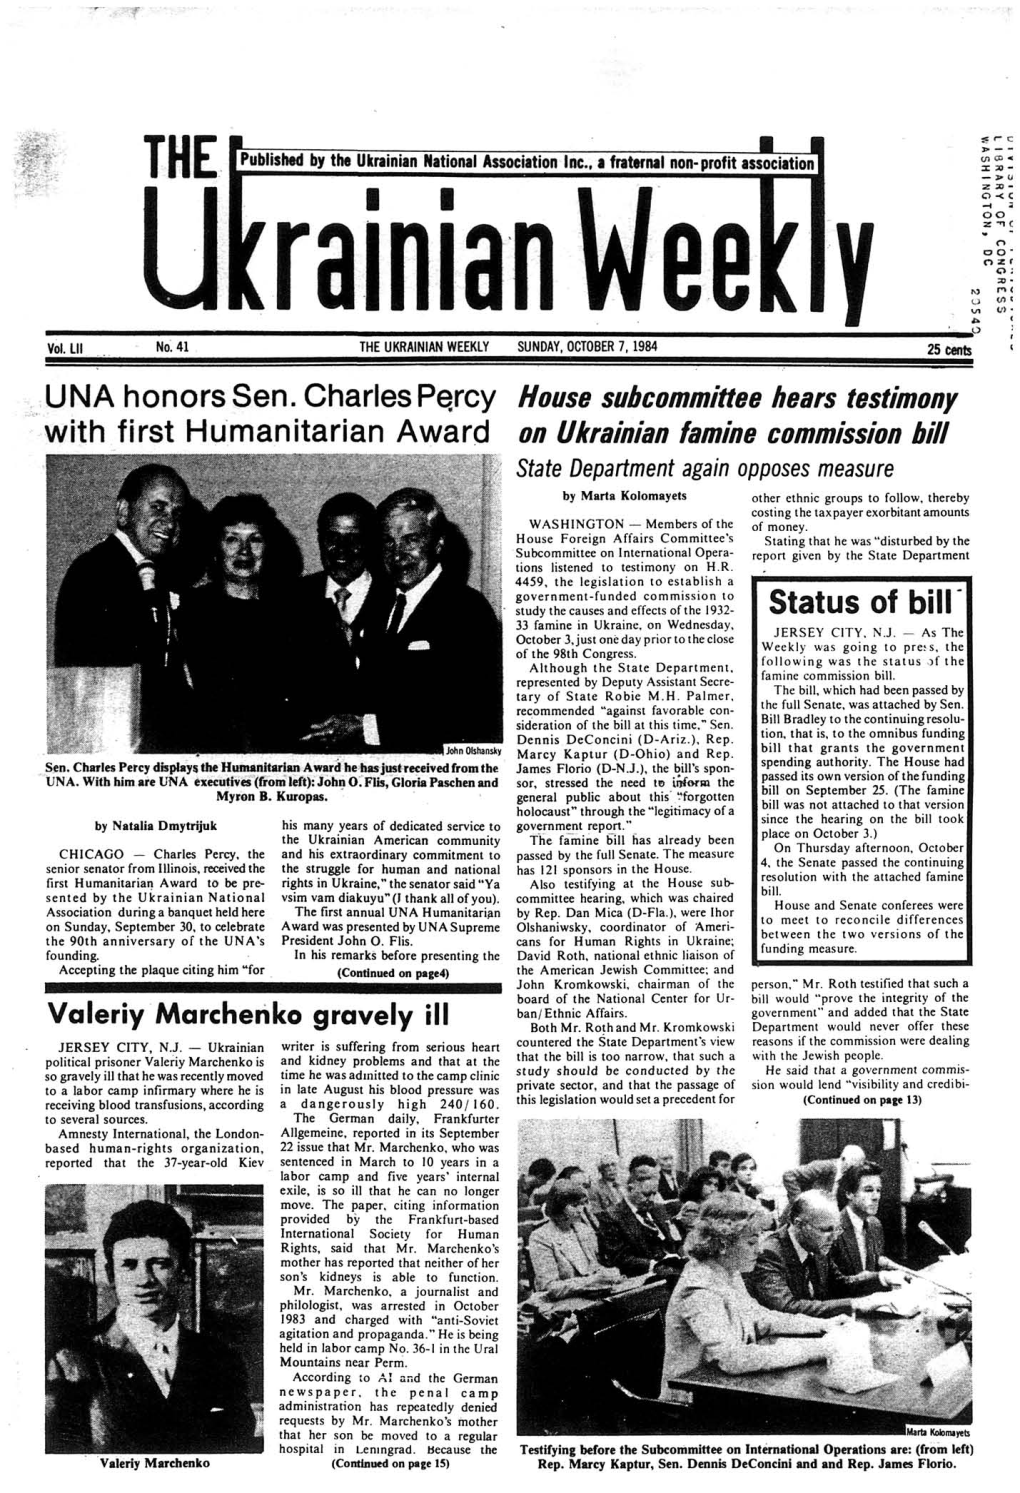 The Ukrainian Weekly 1984, No.41